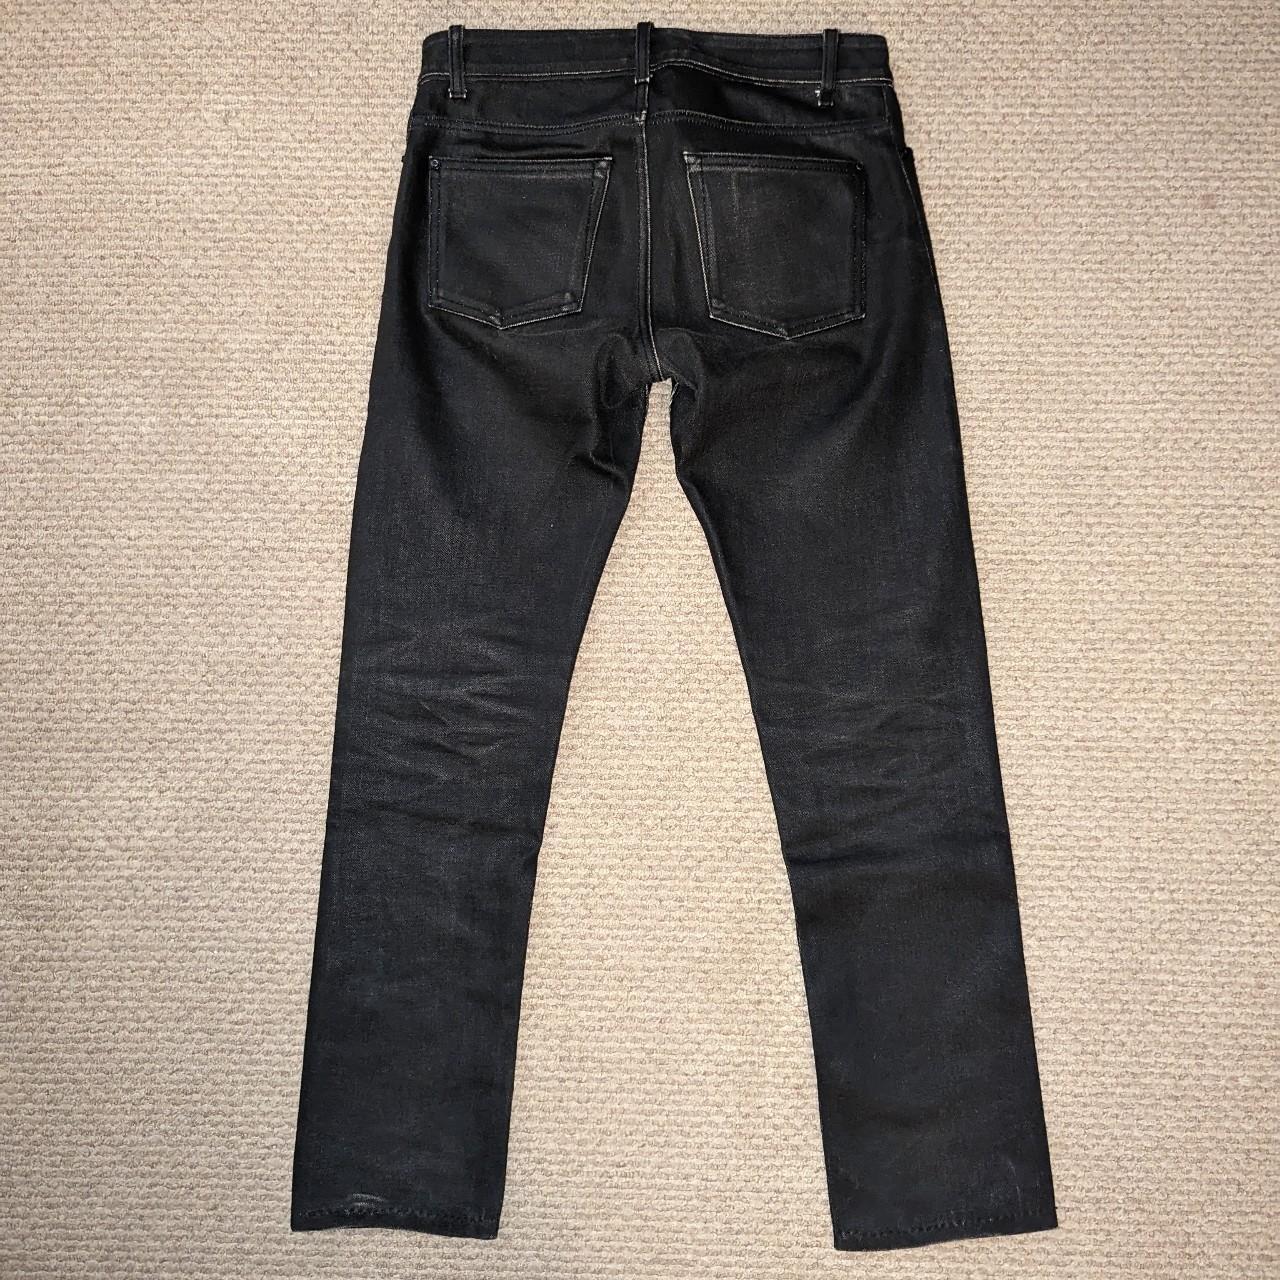 Cập nhật với hơn 74 balenciaga waxed denim jeans hay nhất  trieuson5